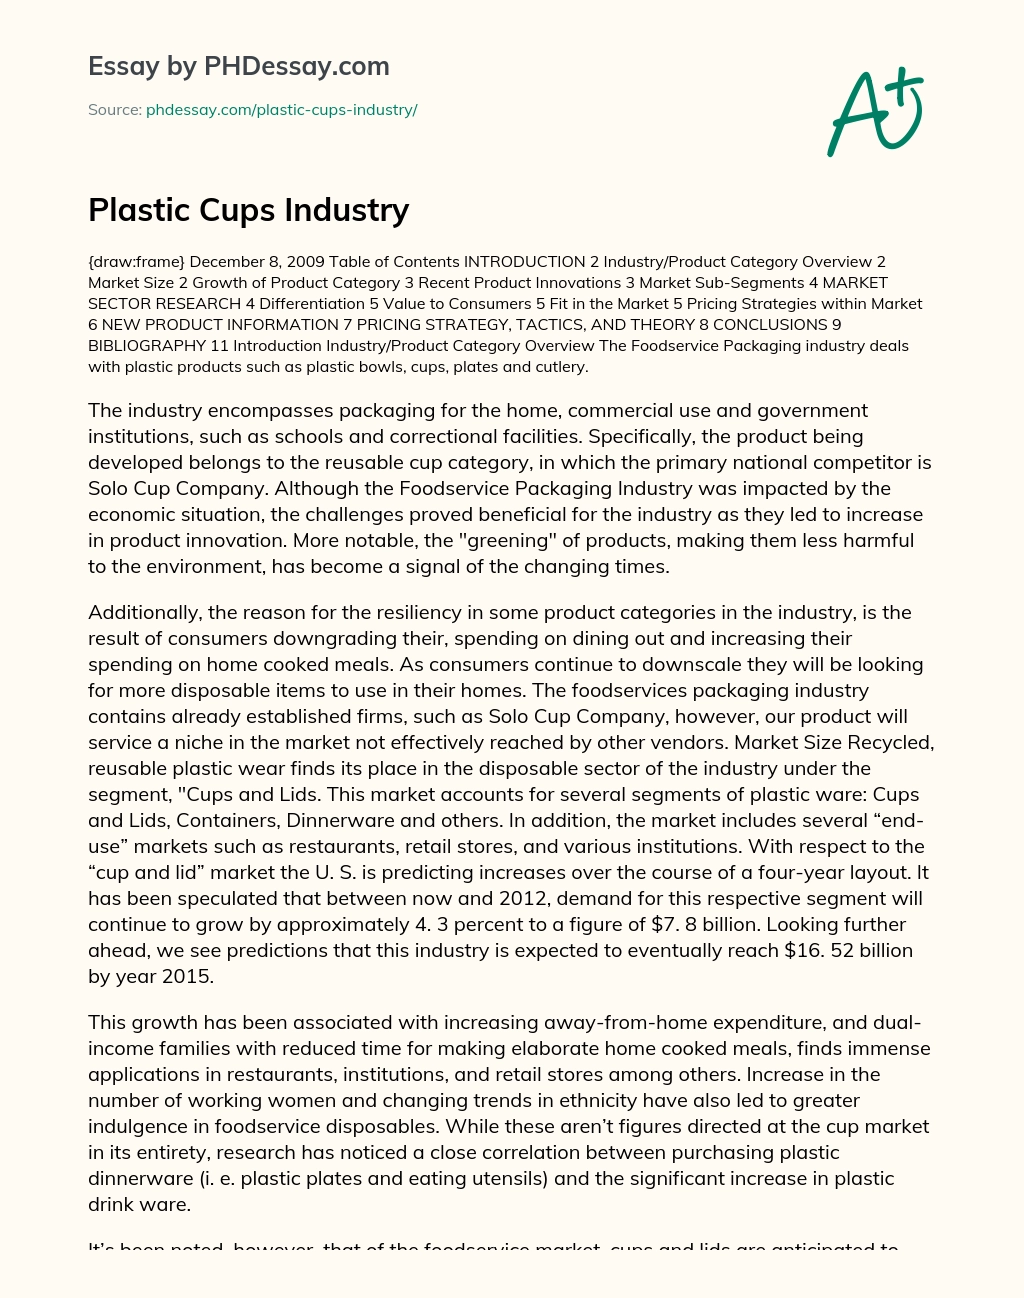 Plastic Cups Industry essay